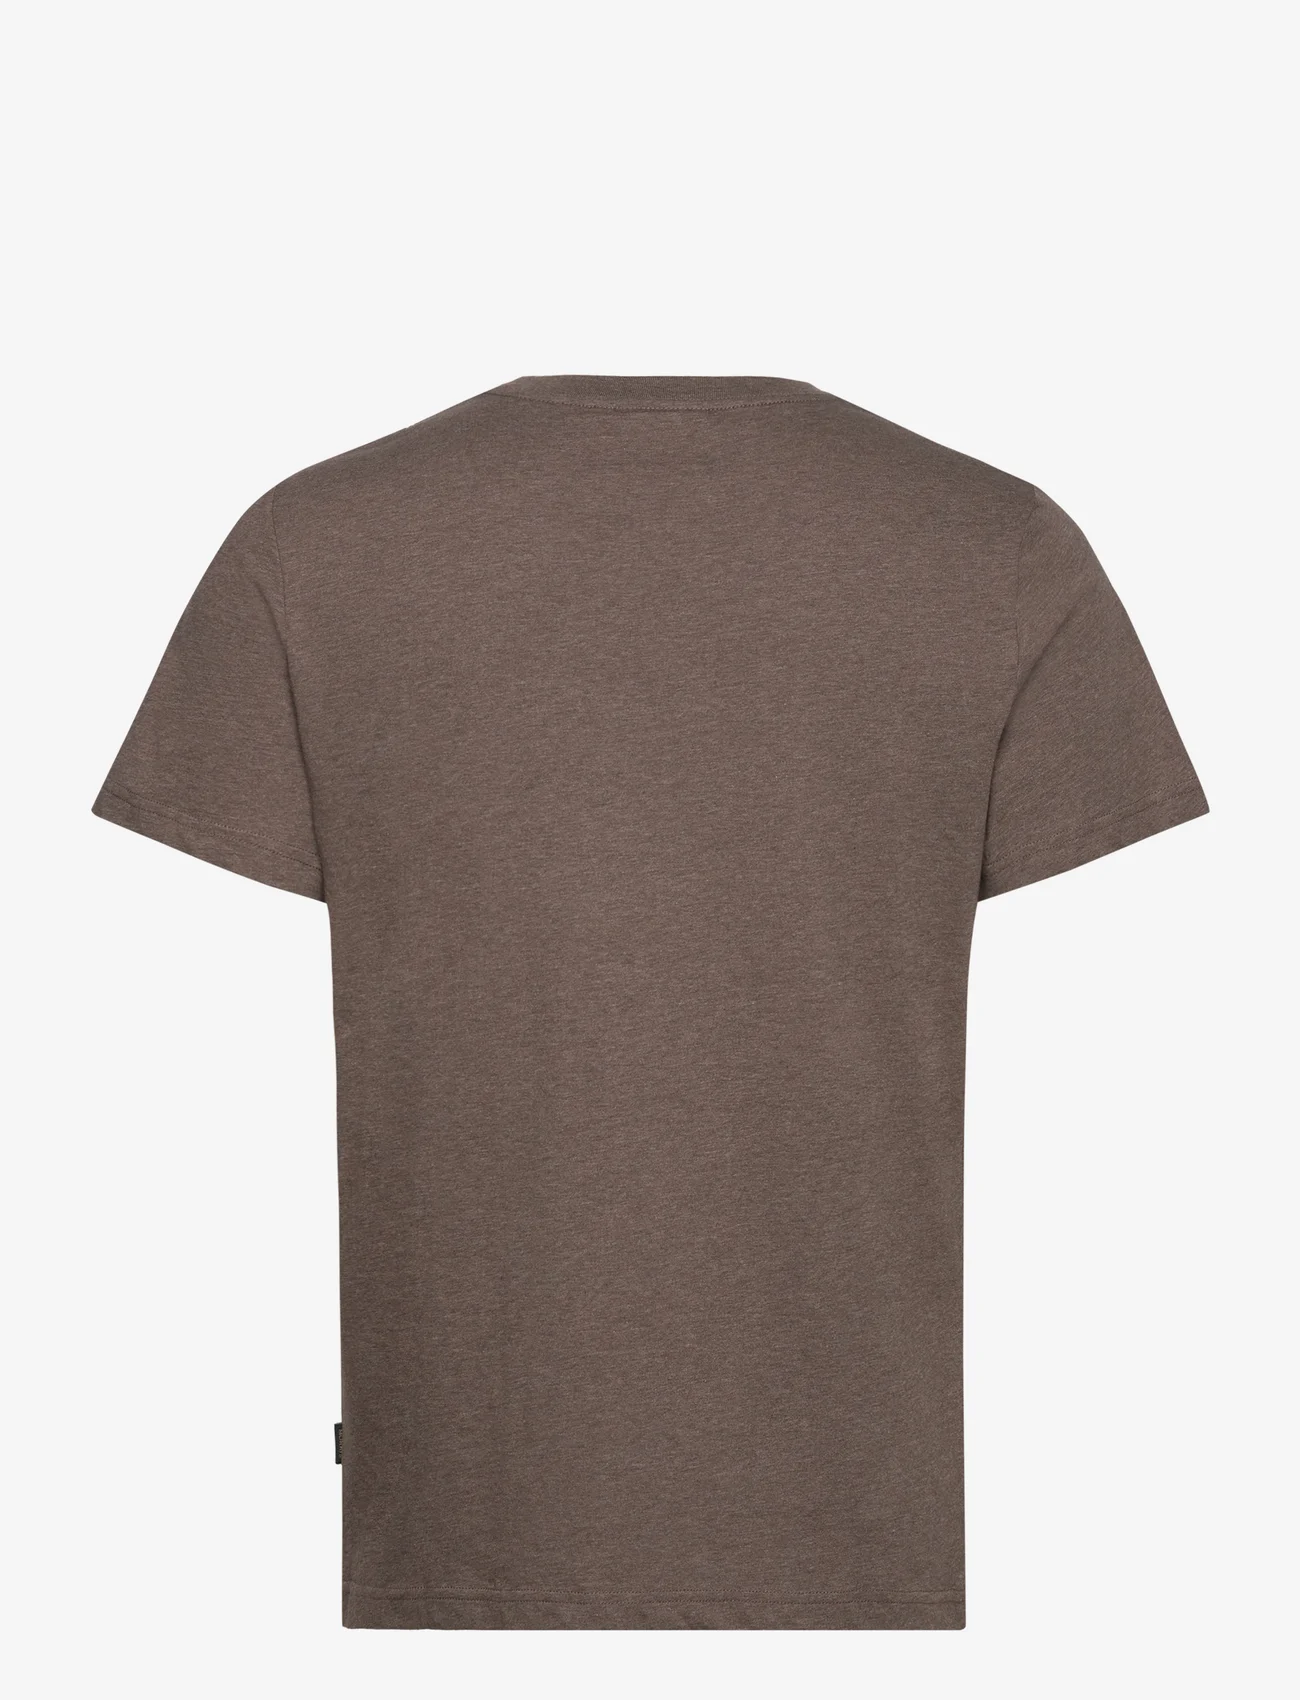 Morris - Cobham Tee - basic t-shirts - brown - 1